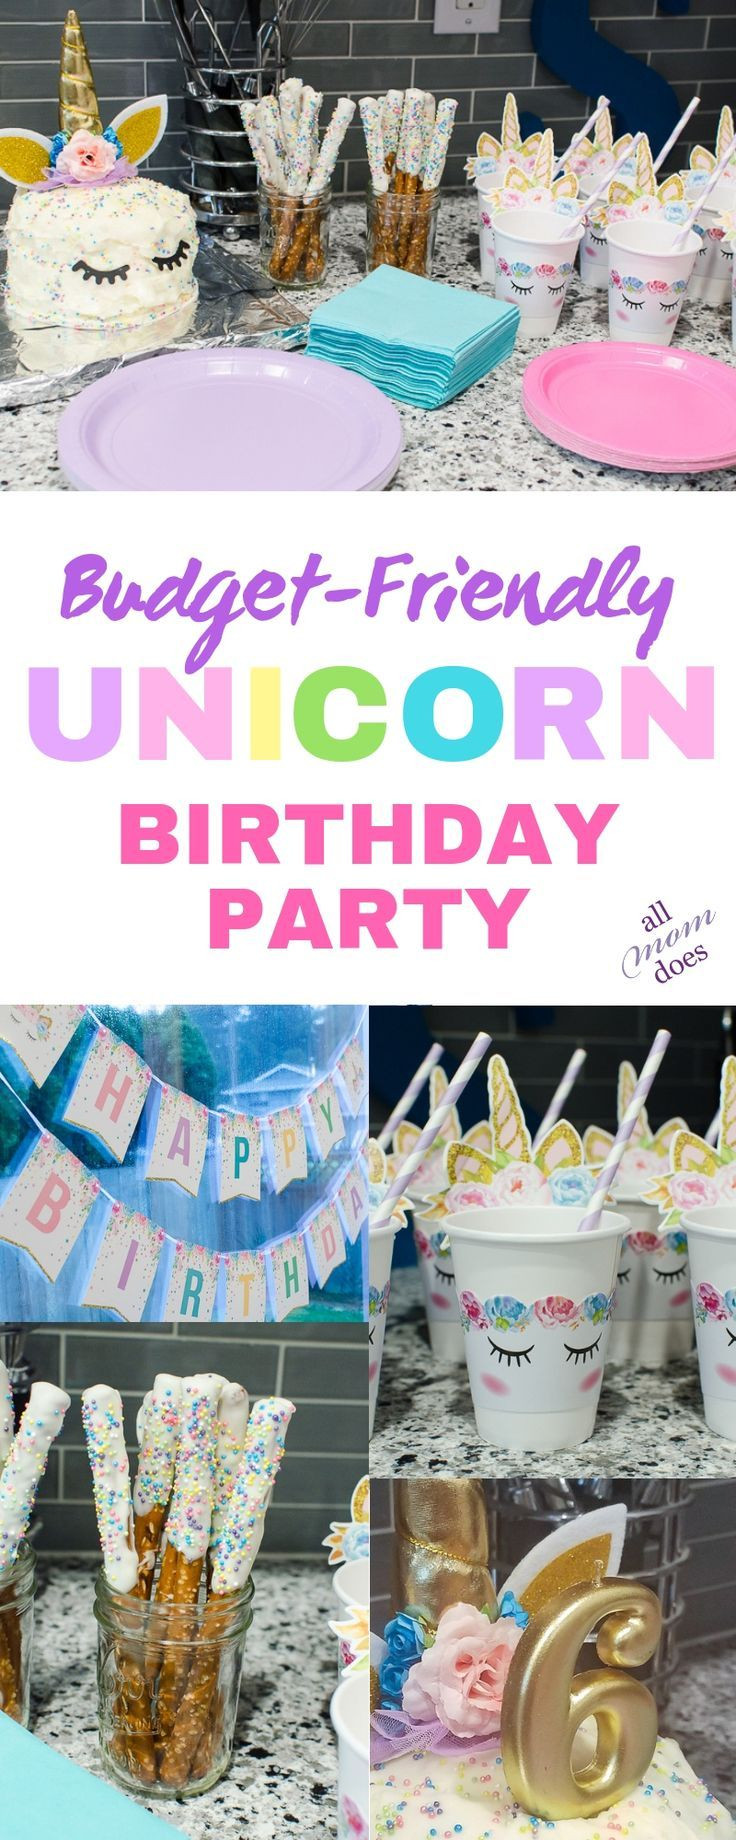 Unicorn Party Ideas On A Budget
 Bud Friendly Unicorn Birthday Party